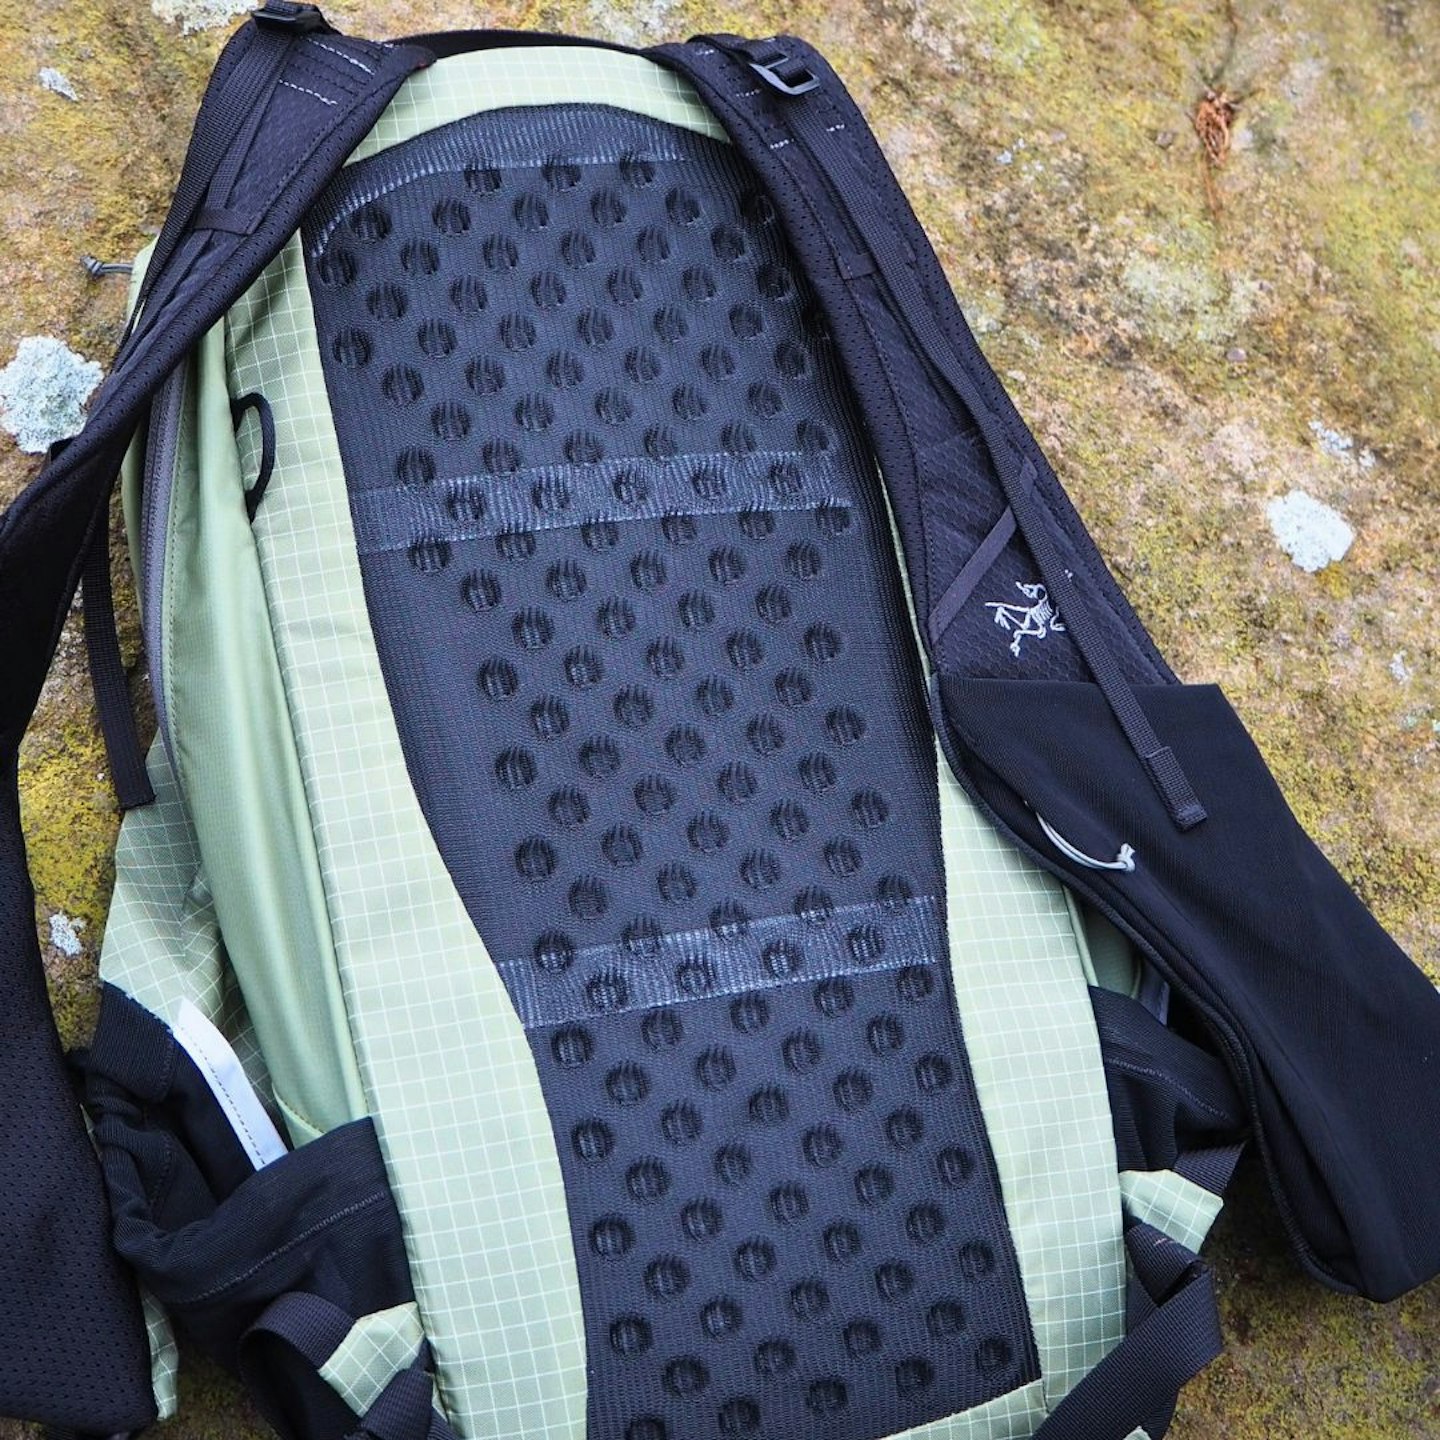 Arc’teryx Aerios 18 Backpack back panel and shoulder strap